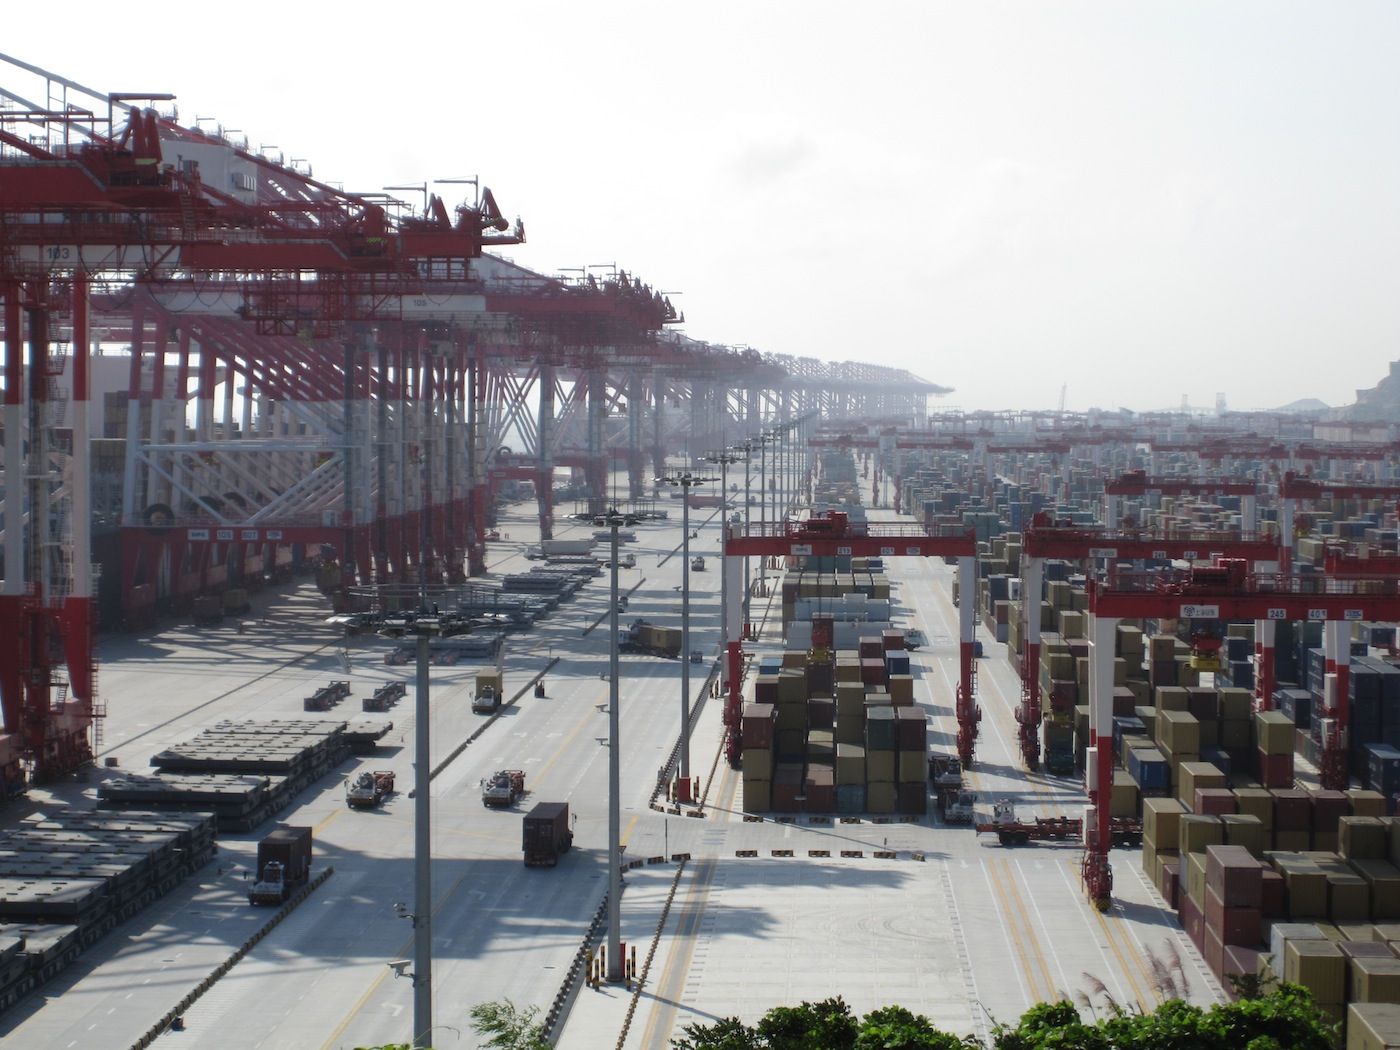 Terminal de contenedores de Yangshan, puerto de Shanghai